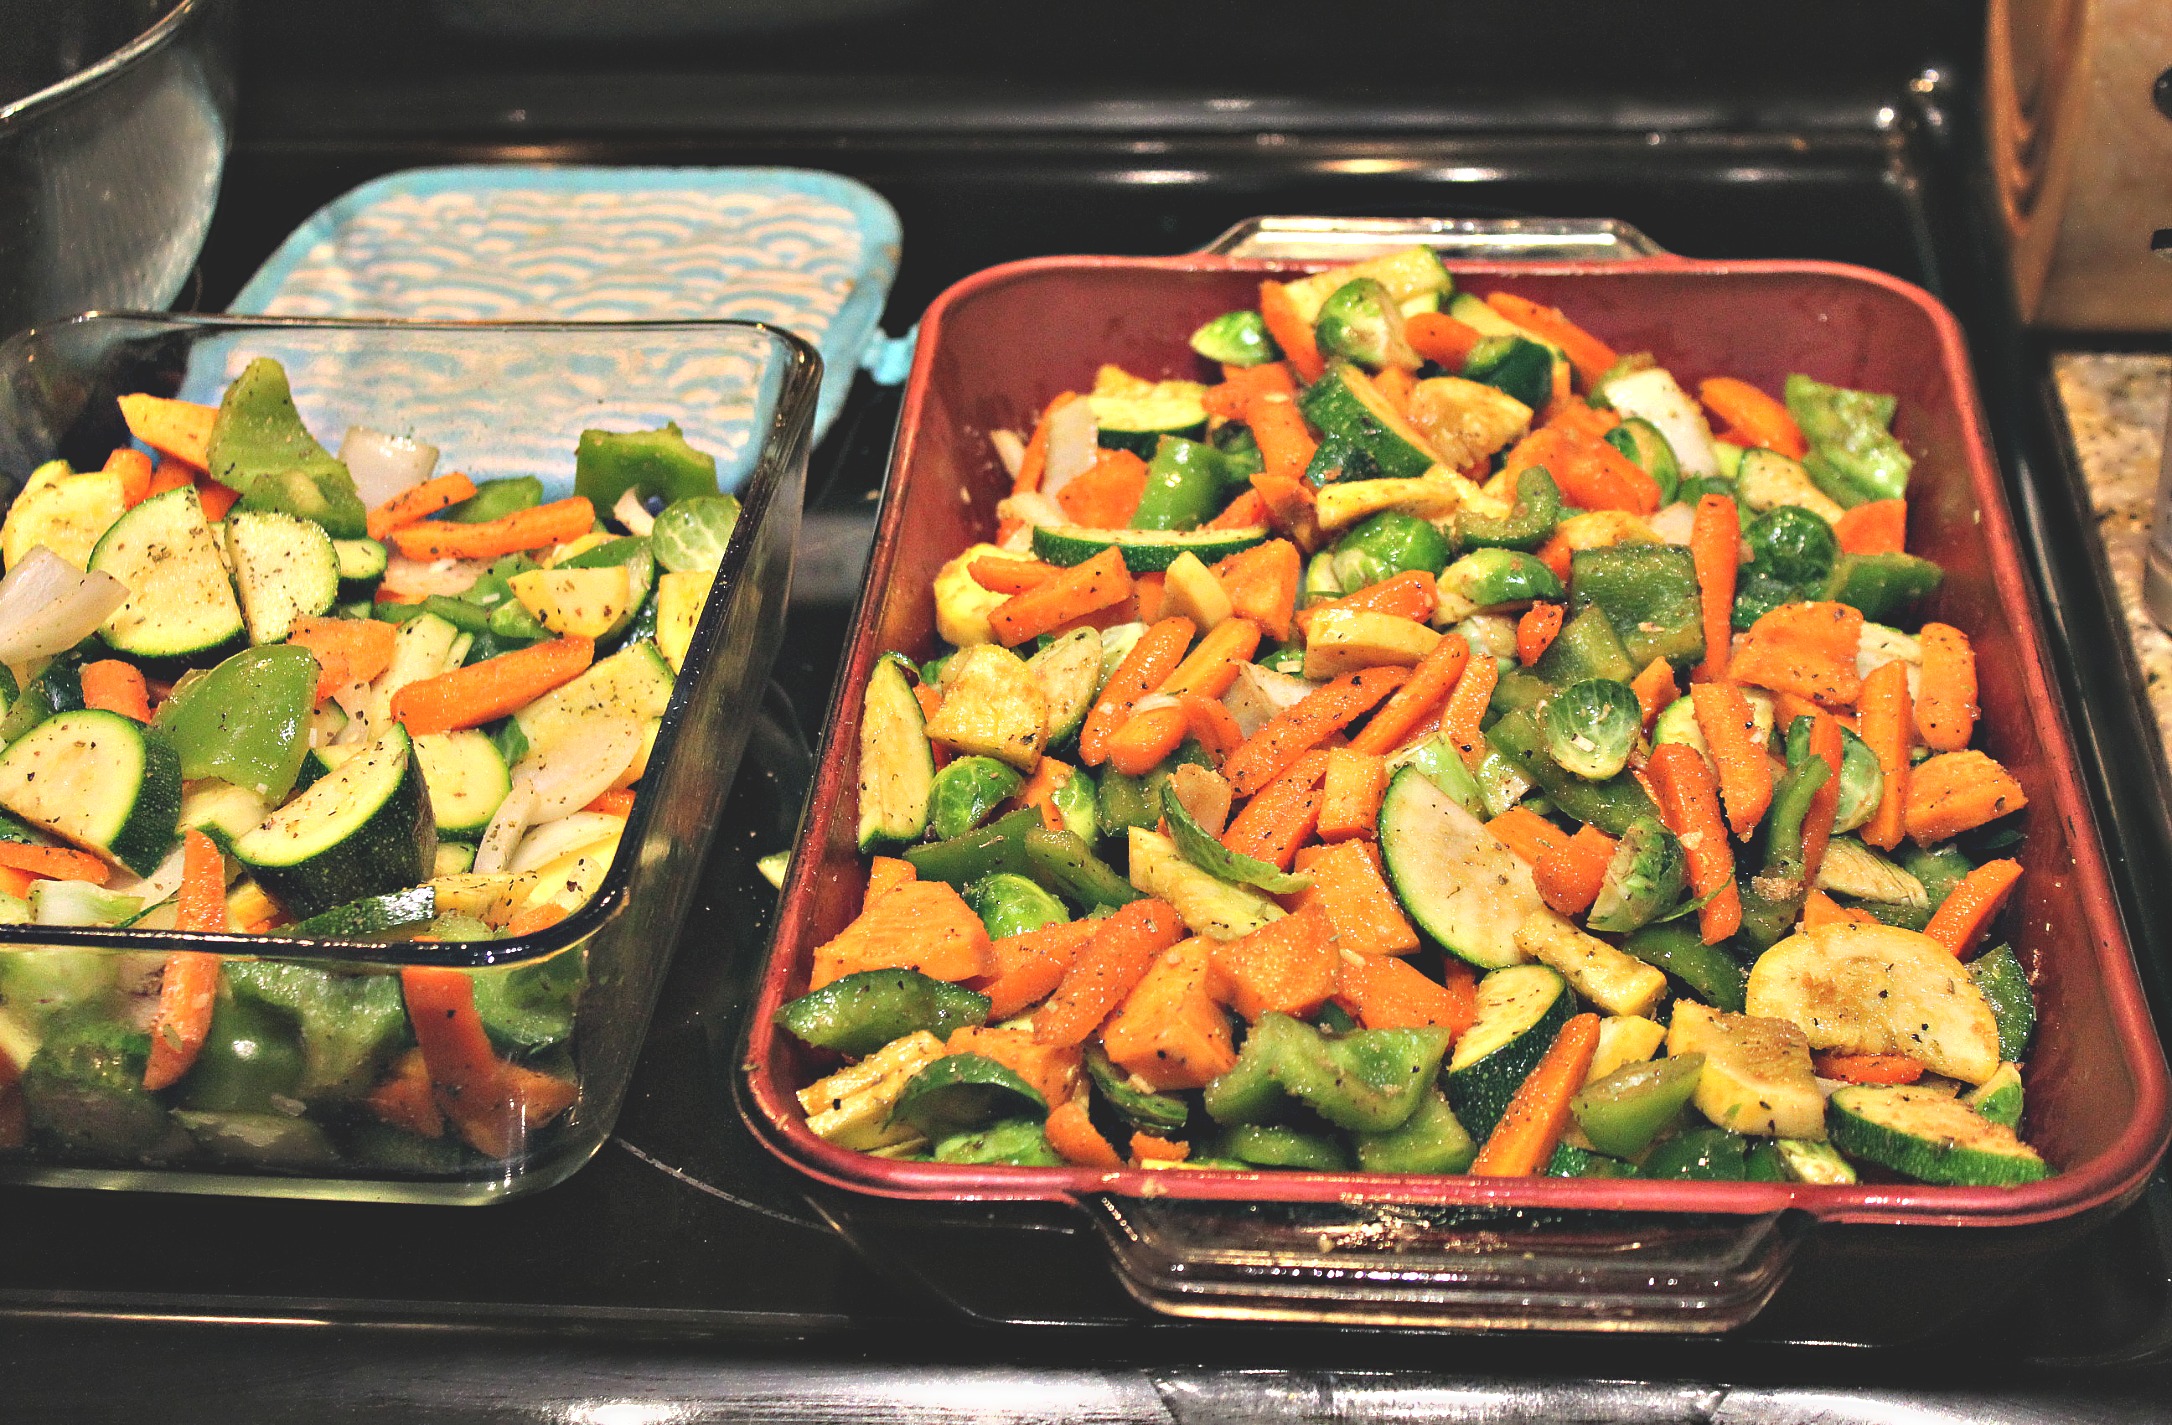 Grilled Chicken, Roasted Vegetables & Healthy Dinner